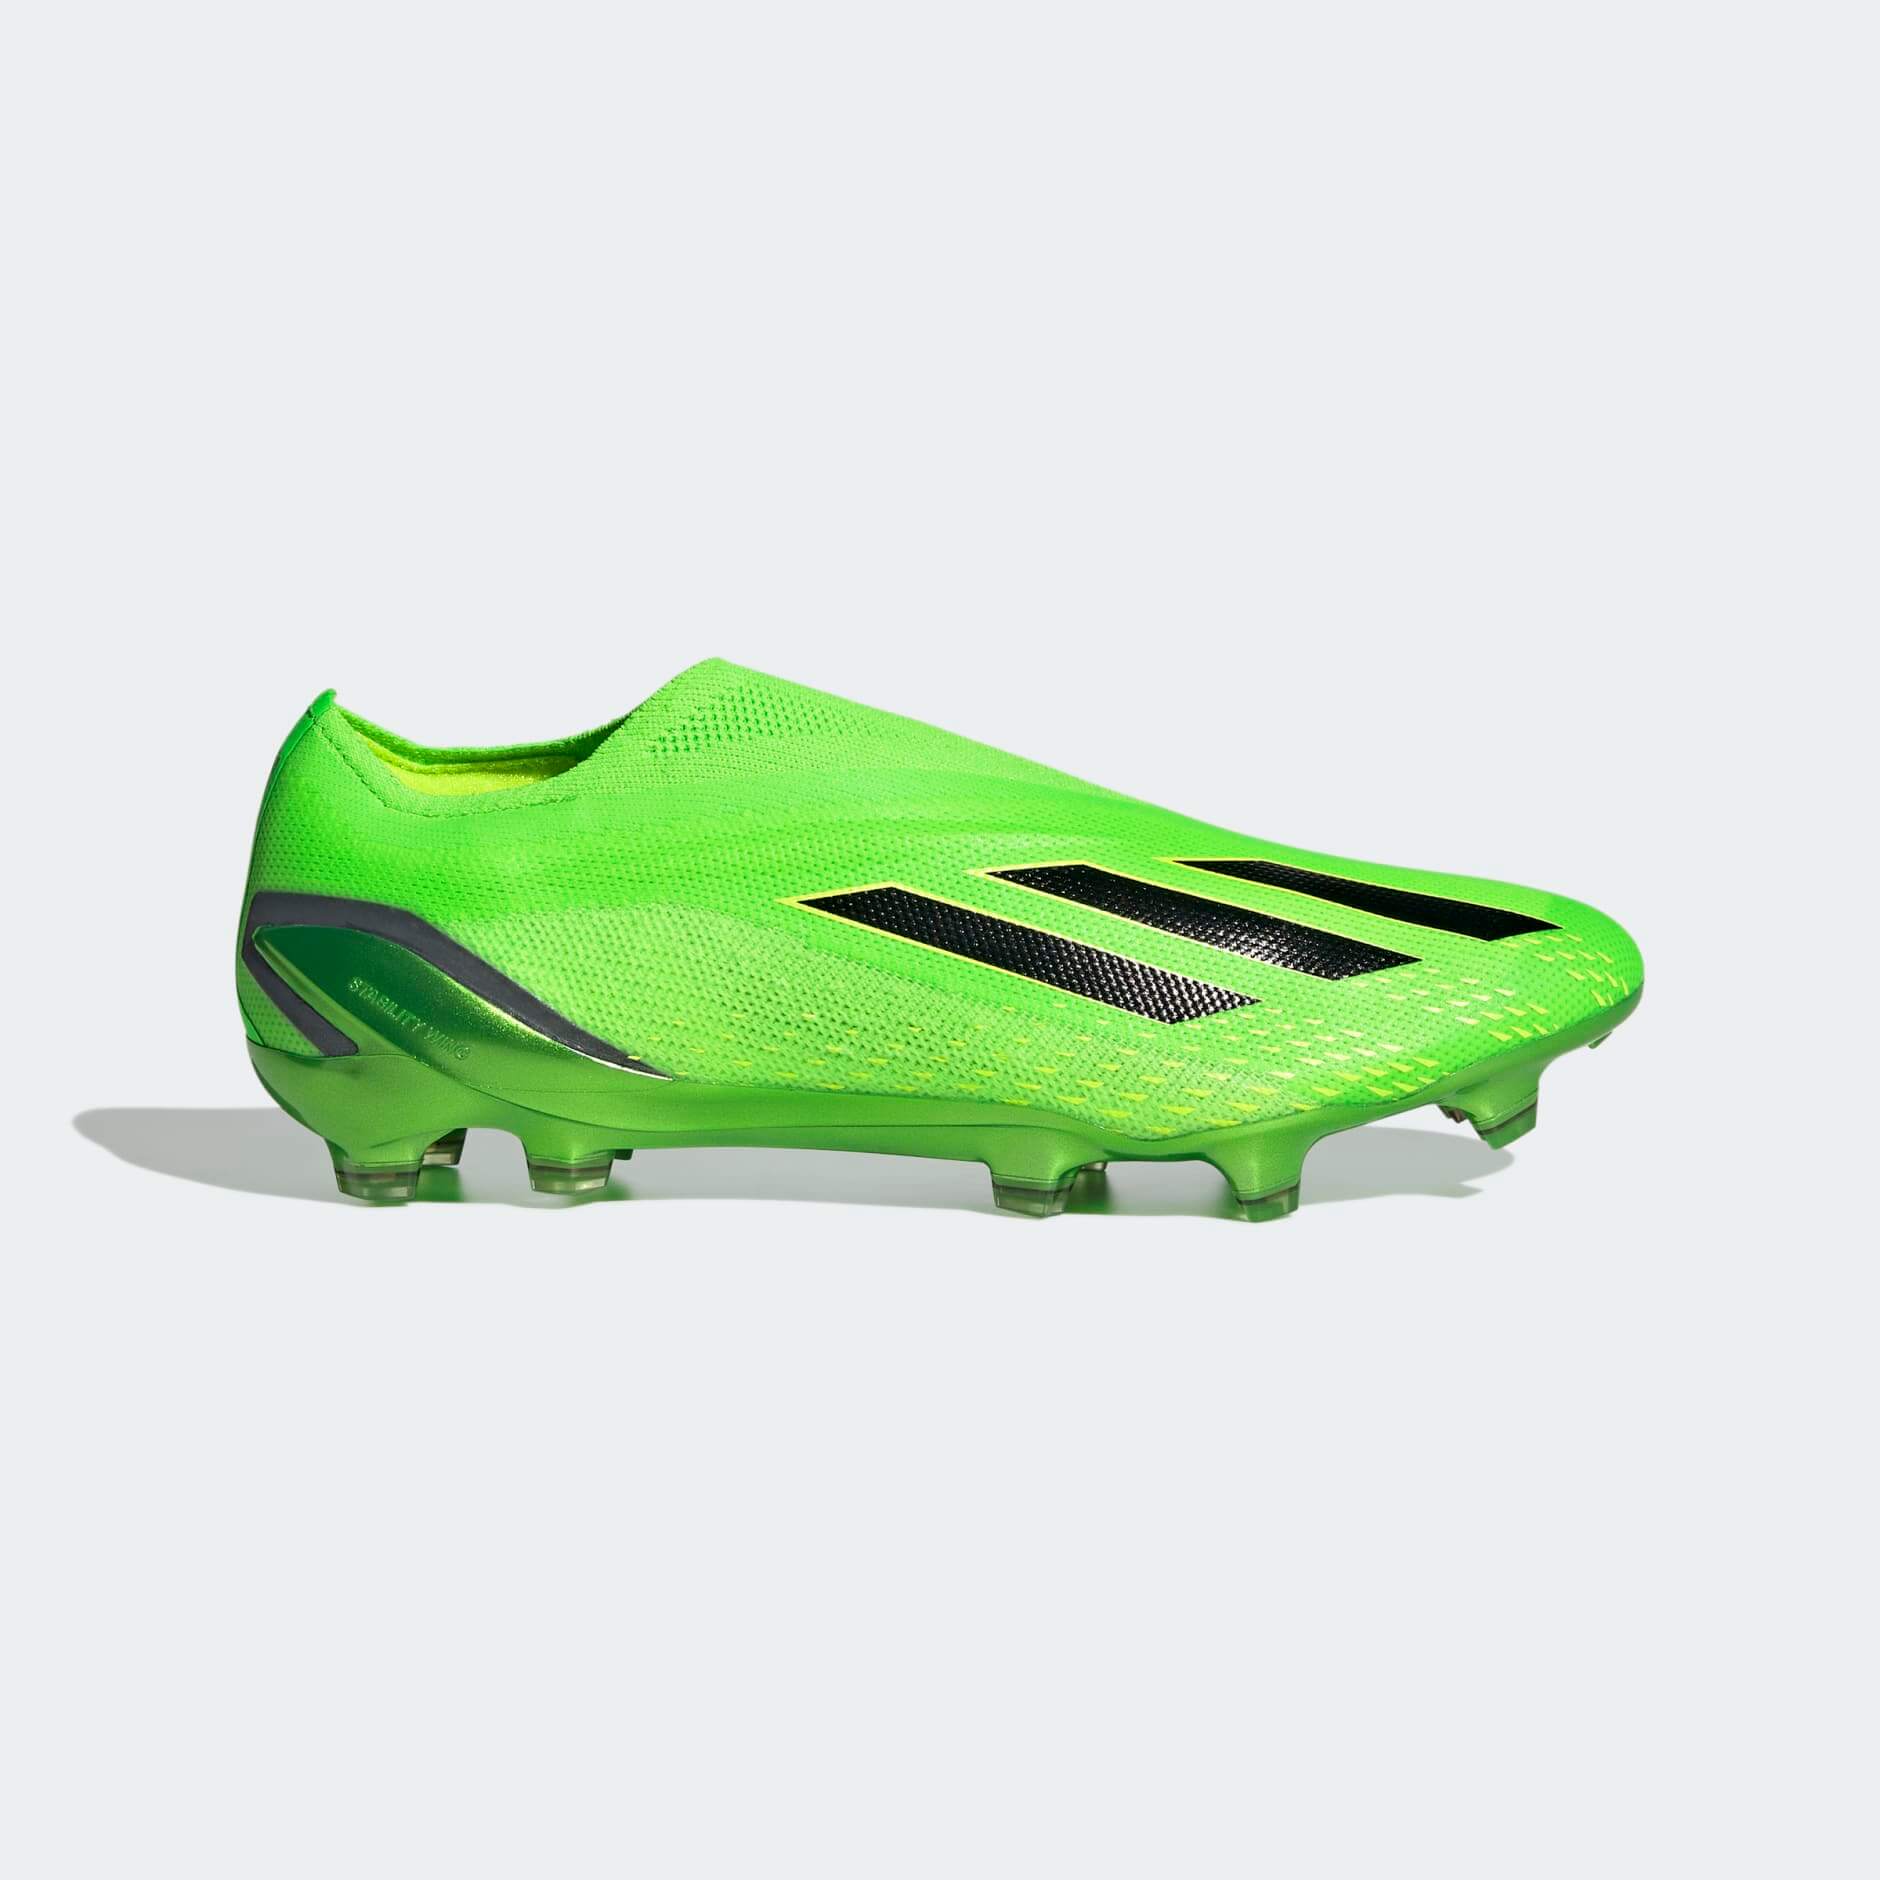 Green Nike Soccer Cleats